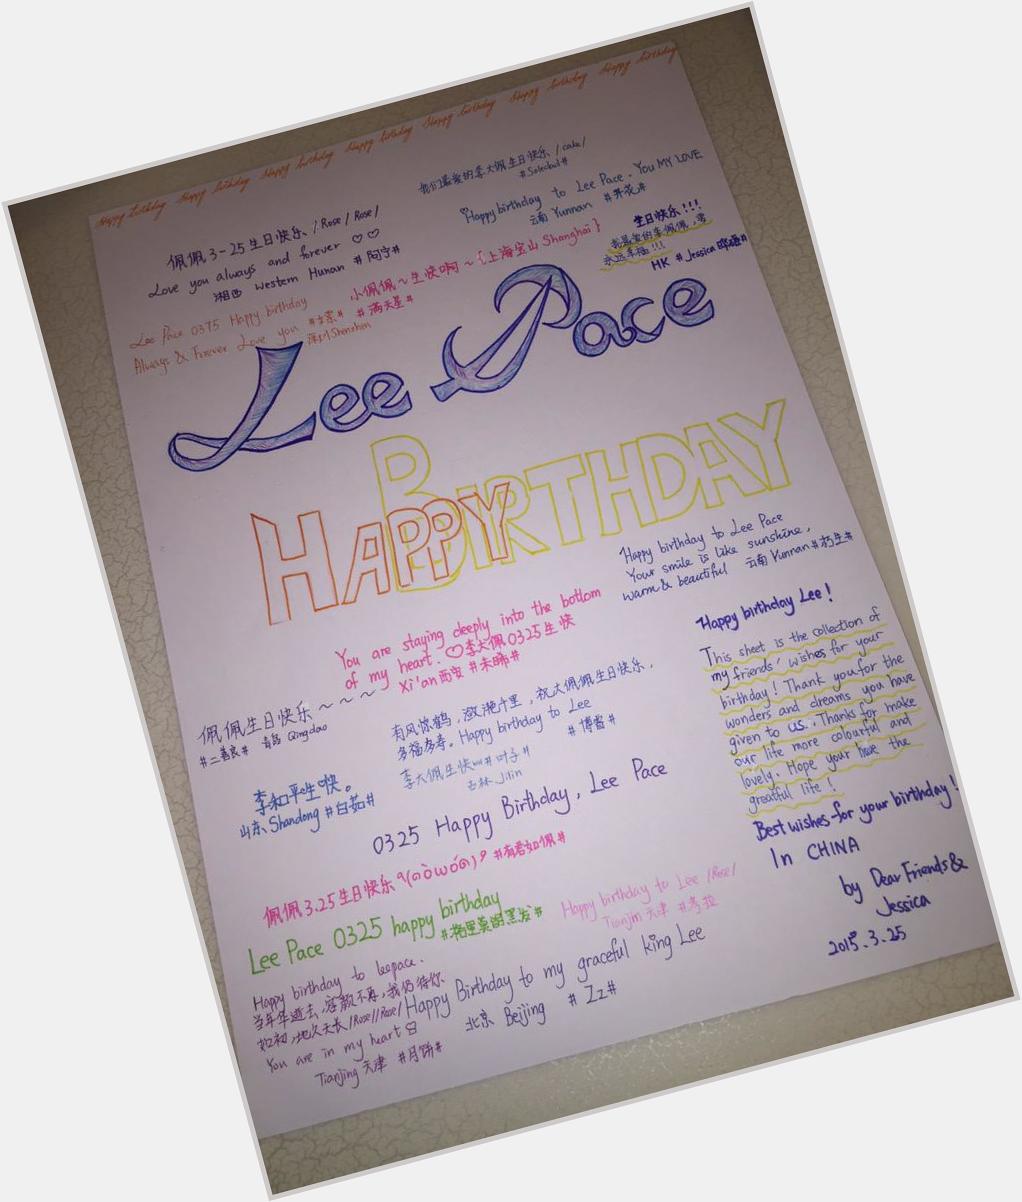 Lee Pace Happy Birthday!! 